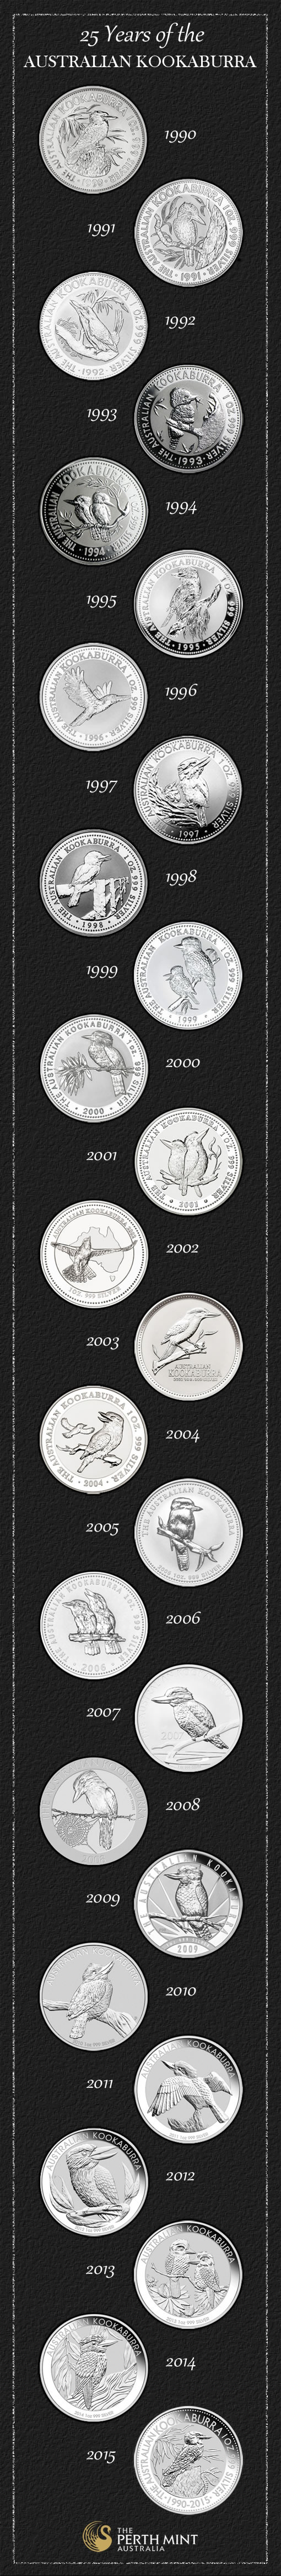 Kookaburra Silver Bullion Coin Designs from 1990 to 2015